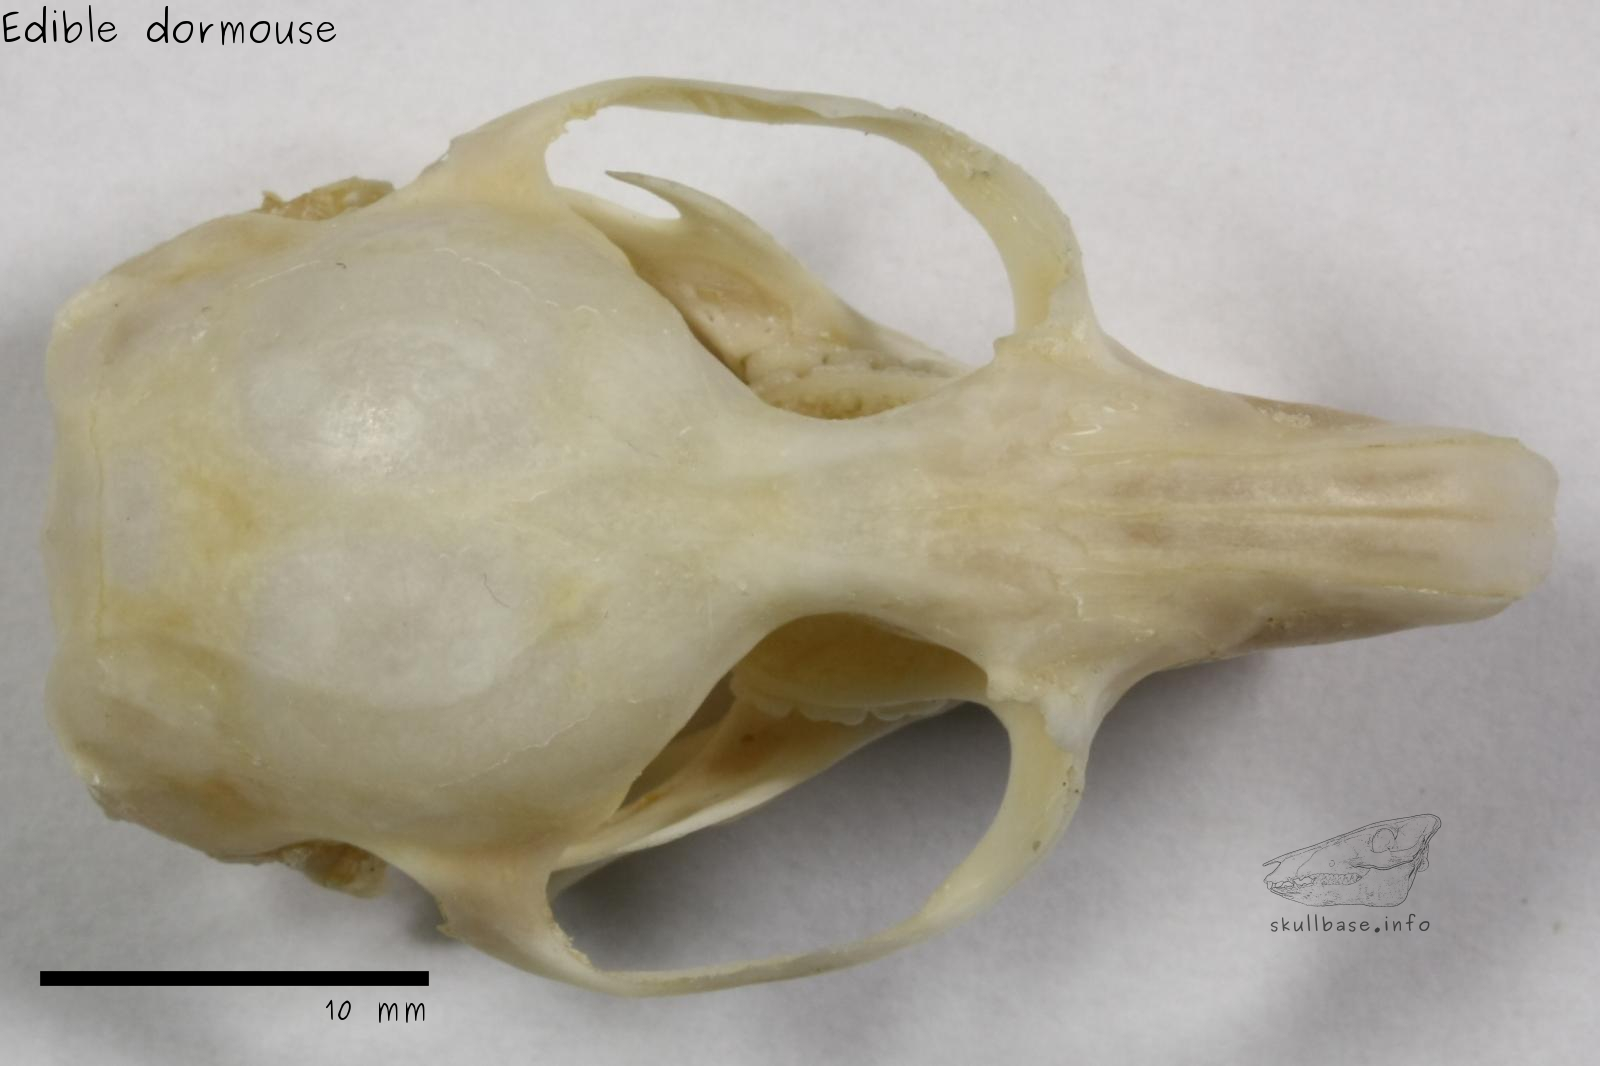 Edible dormouse (Glis glis) skull dorsal view